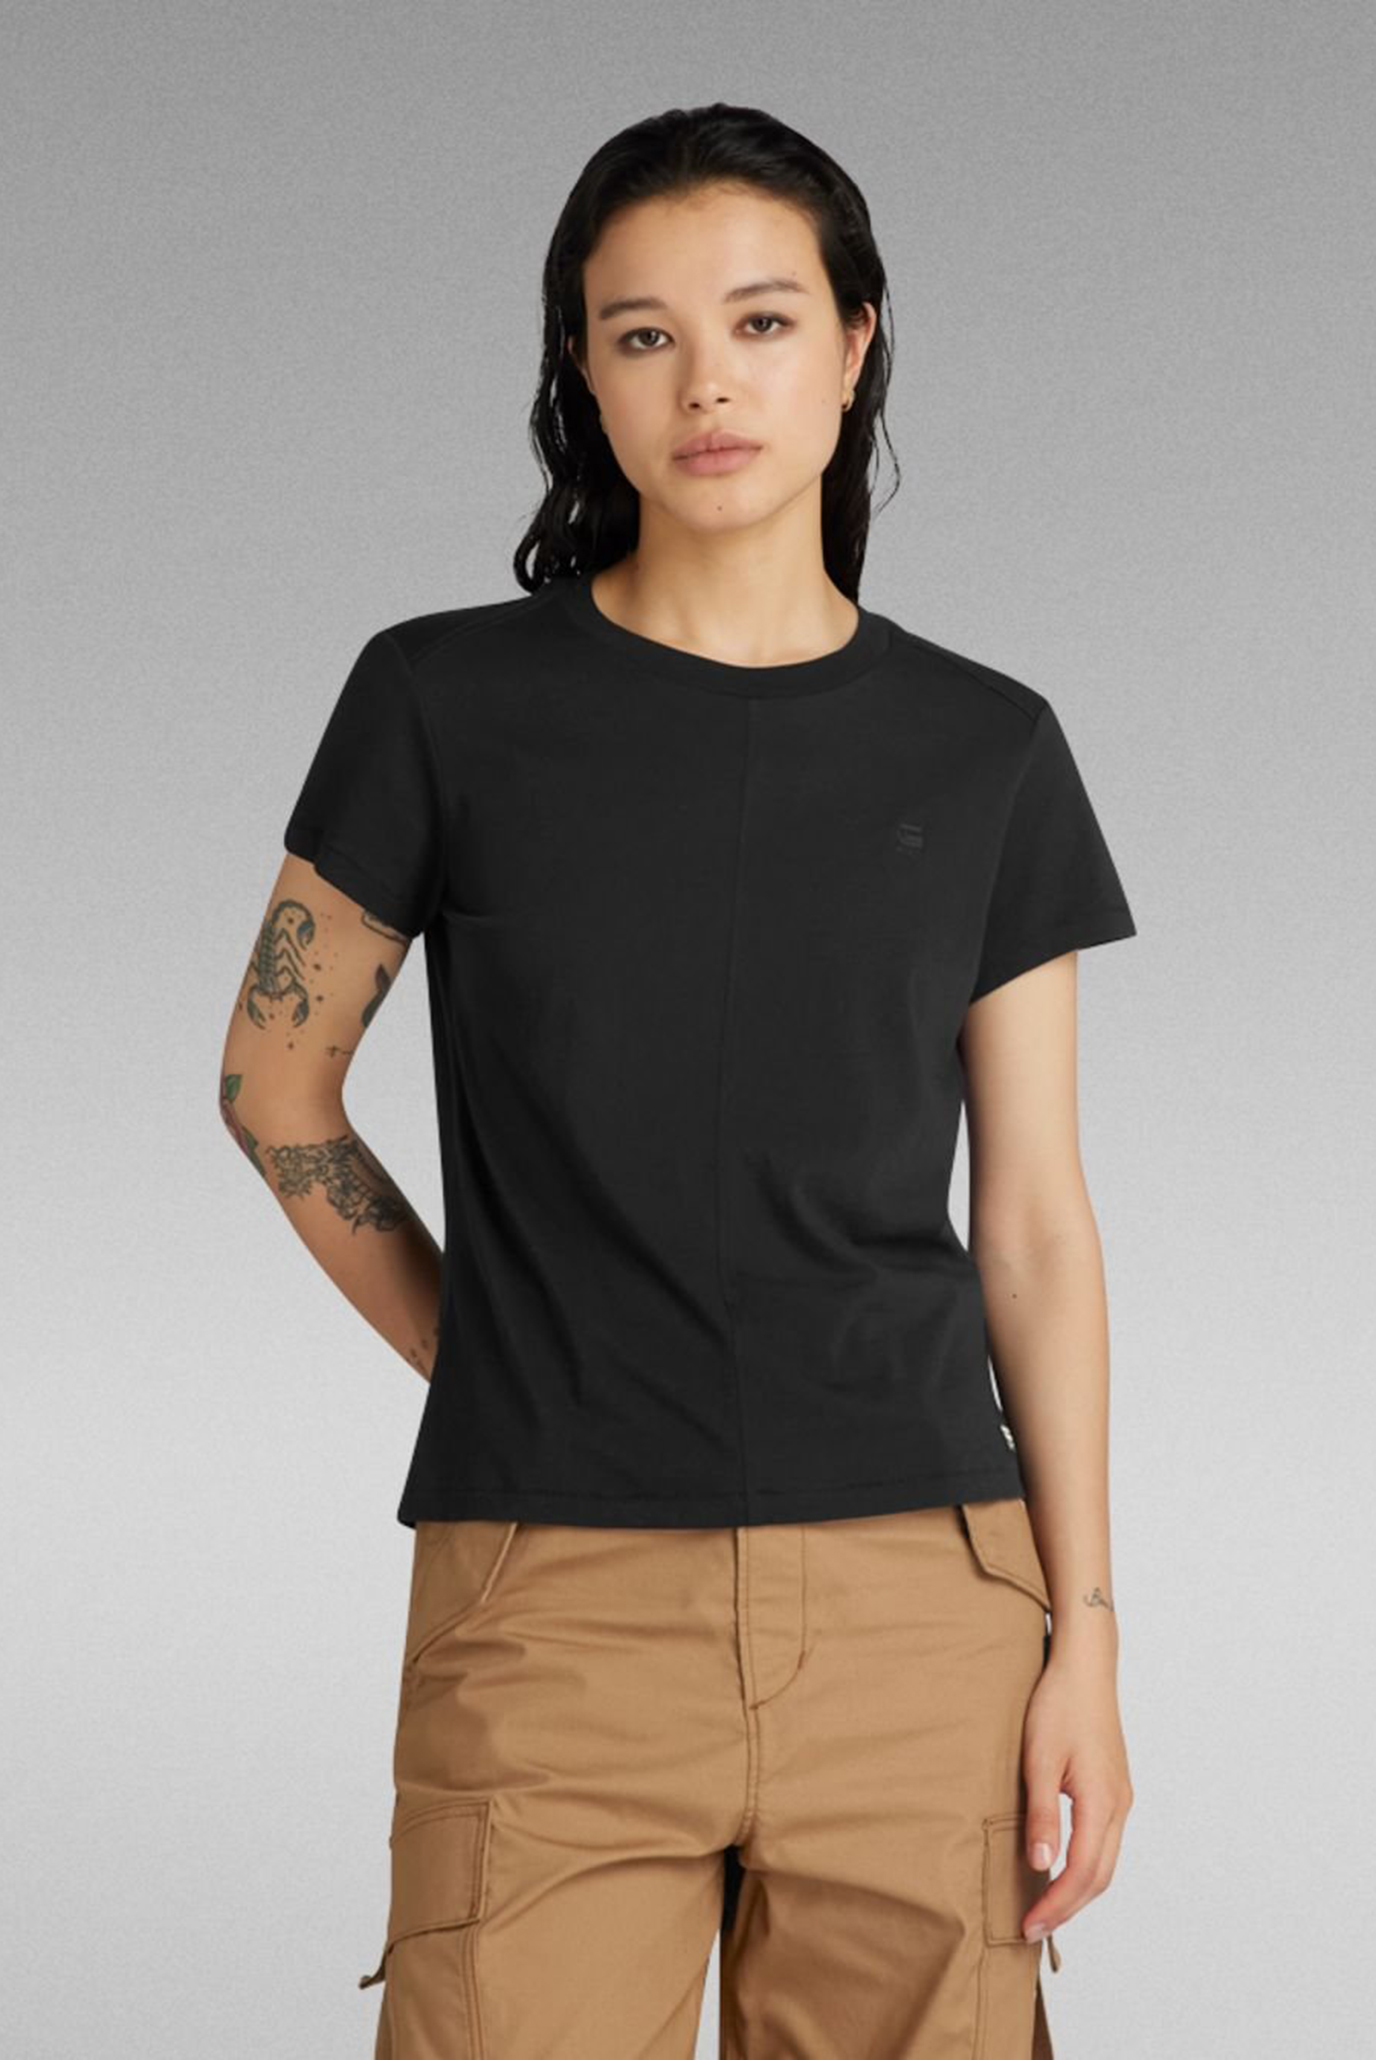 Женская черная футболка Front seam r t 1